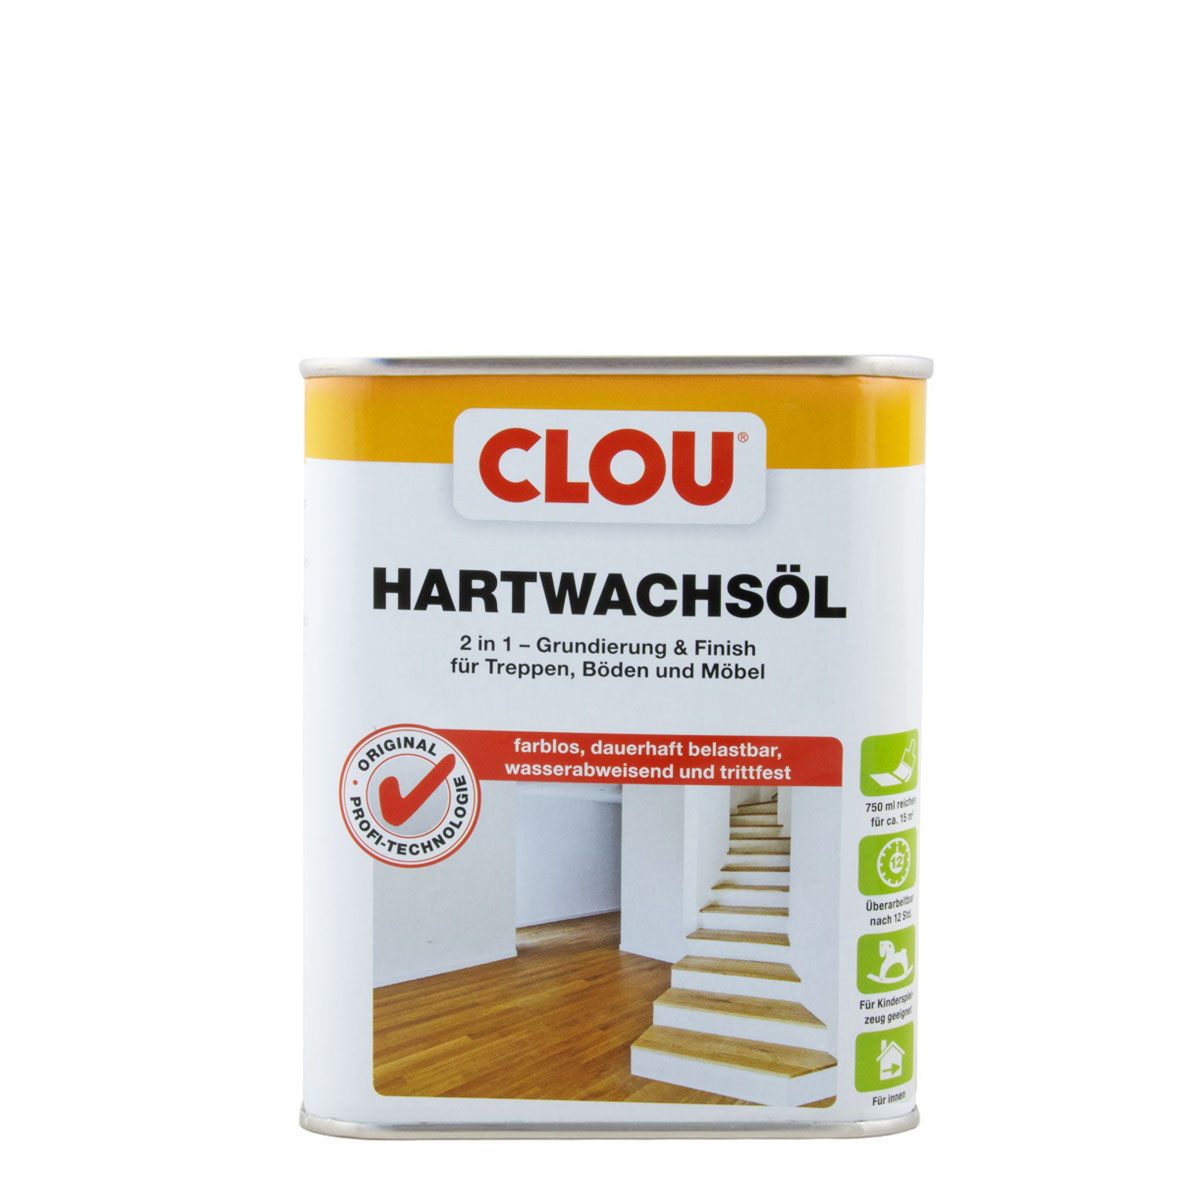 Clou Hartwachs-Öl 750ml farblos, schmutzabweisend